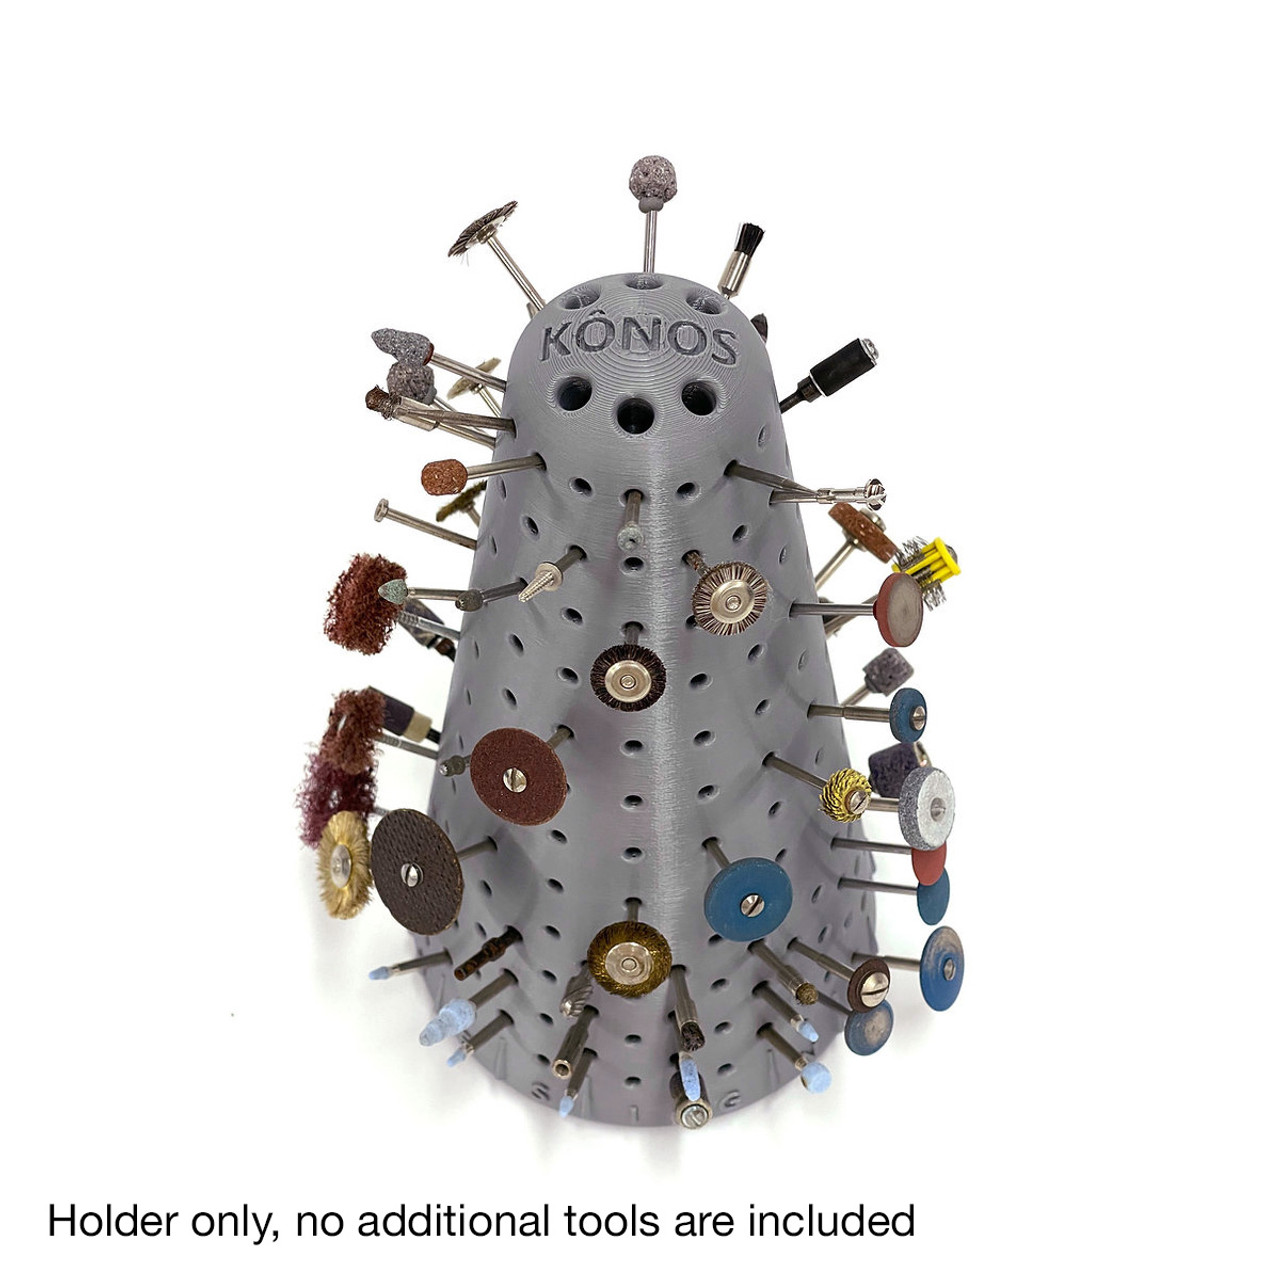 Kerf Jeweler's Saw Blade Holder with Swiss Saw Blades Kit